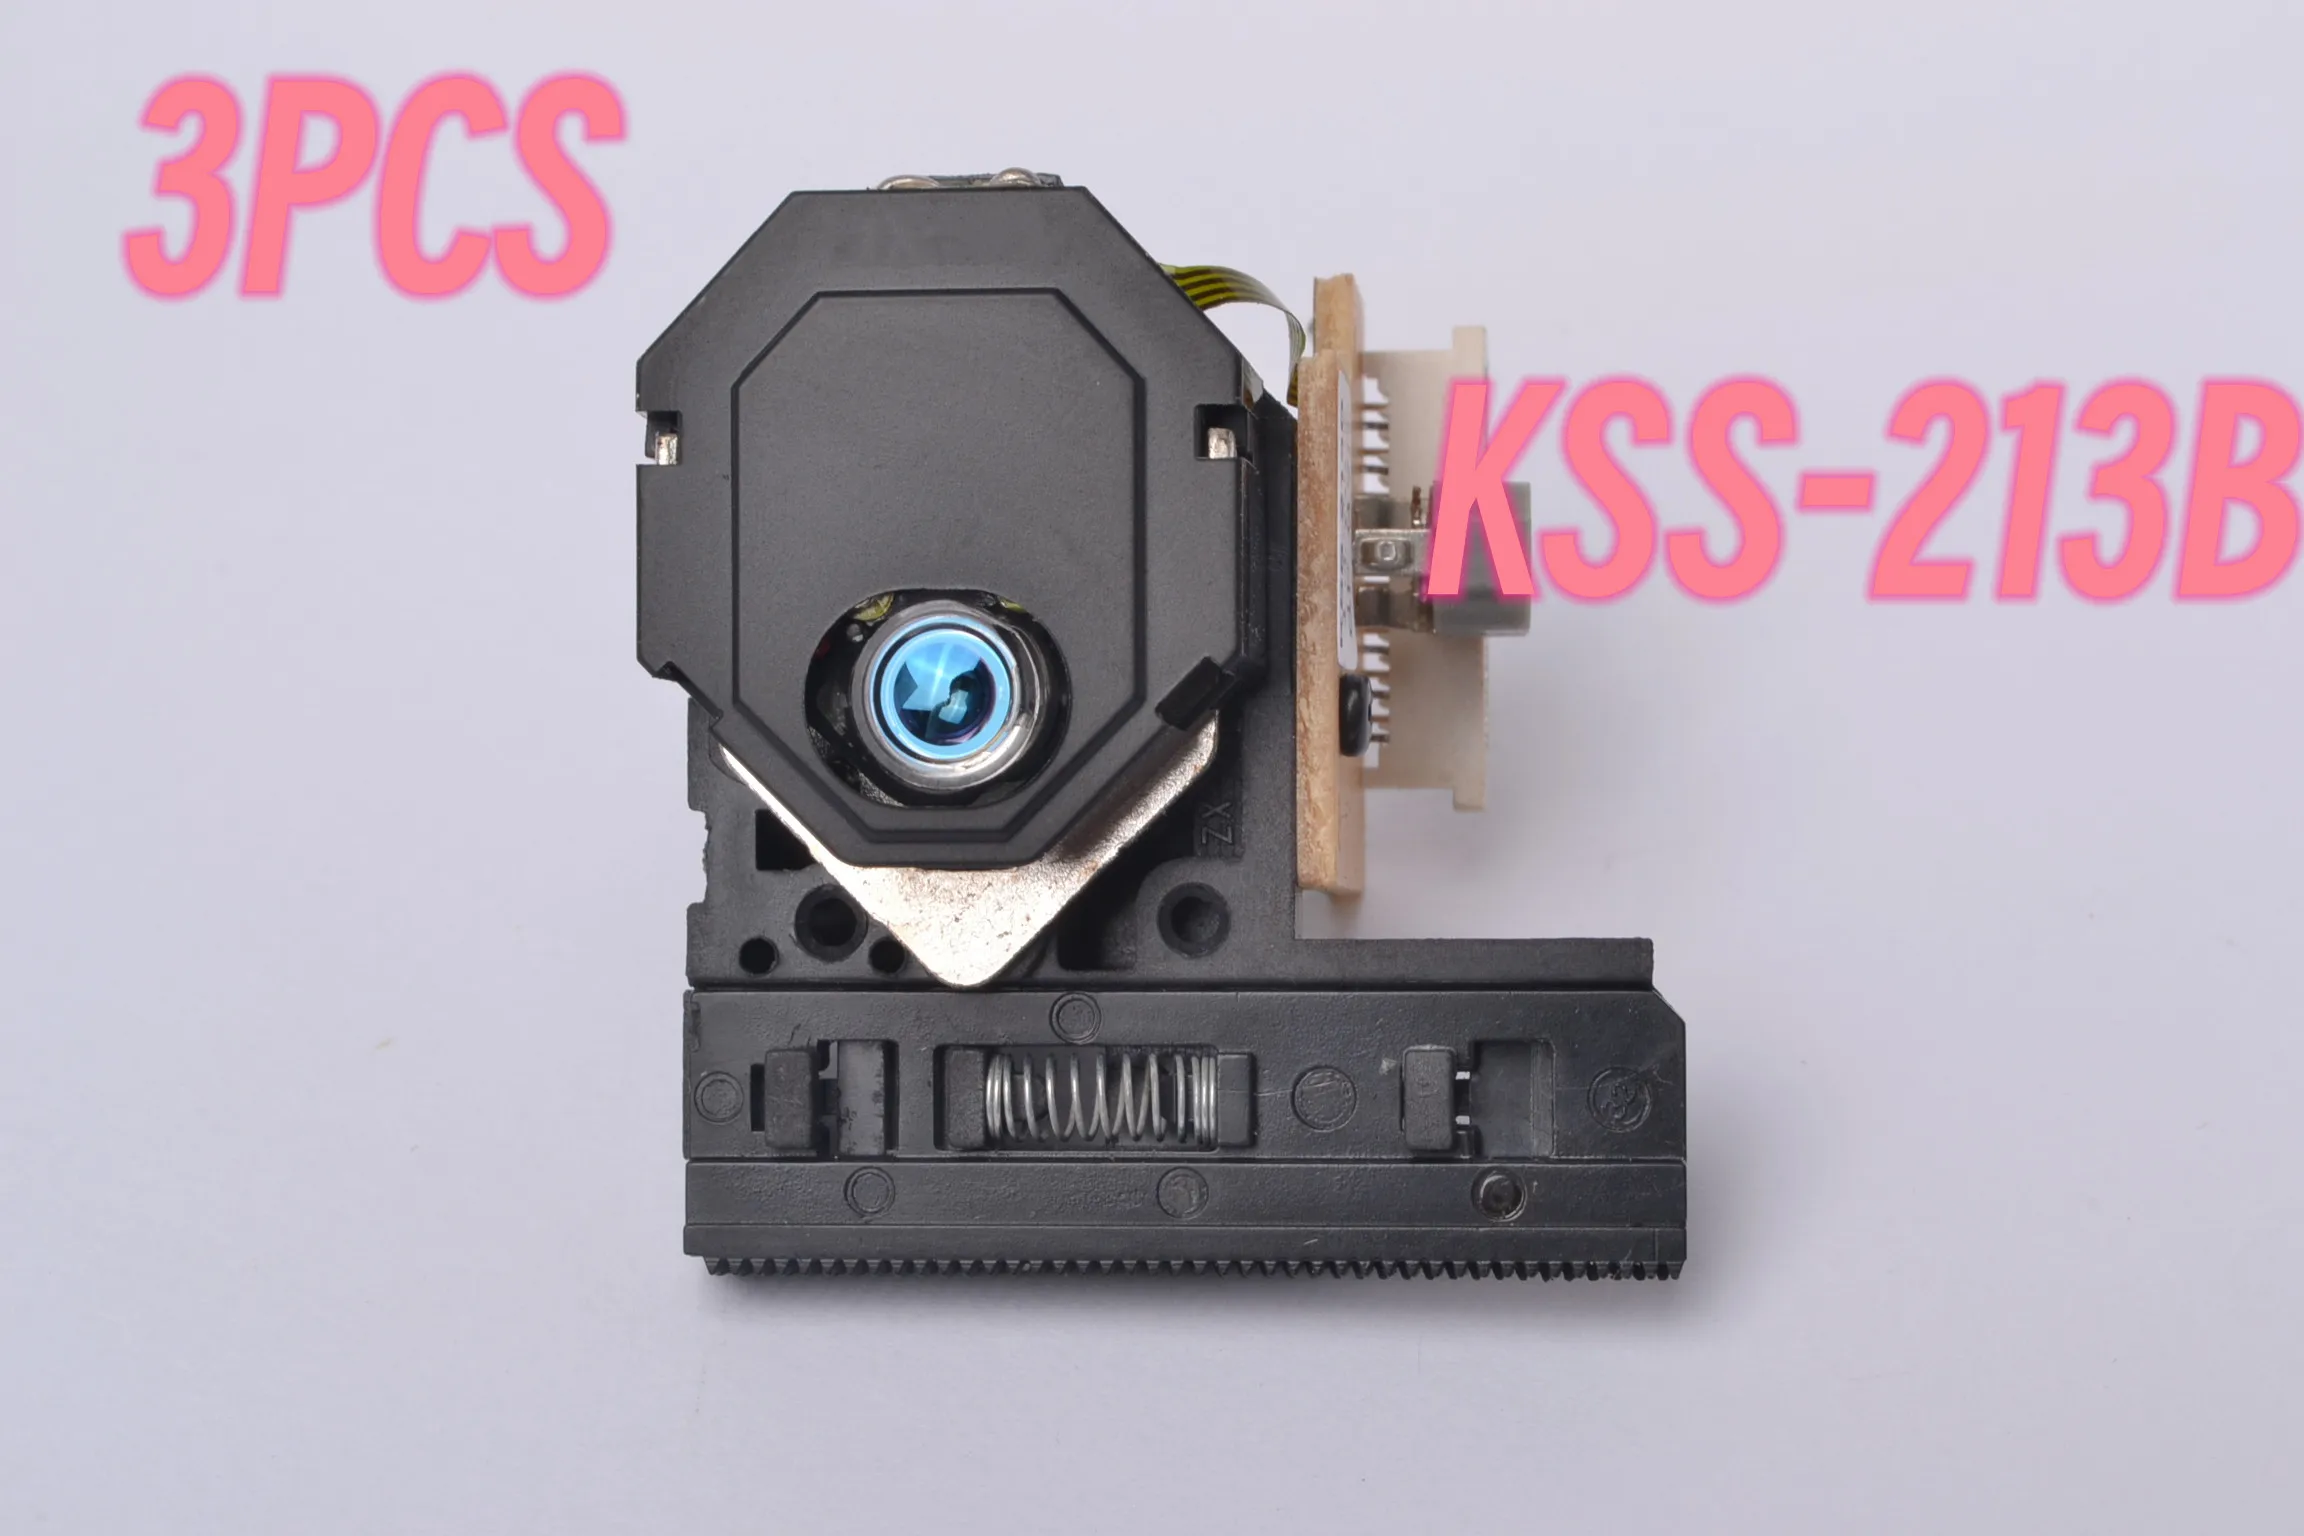 3PCS/LOT Brand new KSS-213B Optical Pick-up Laser Lens Laser Head fit FOR DVD CD Player Repair KSS213B